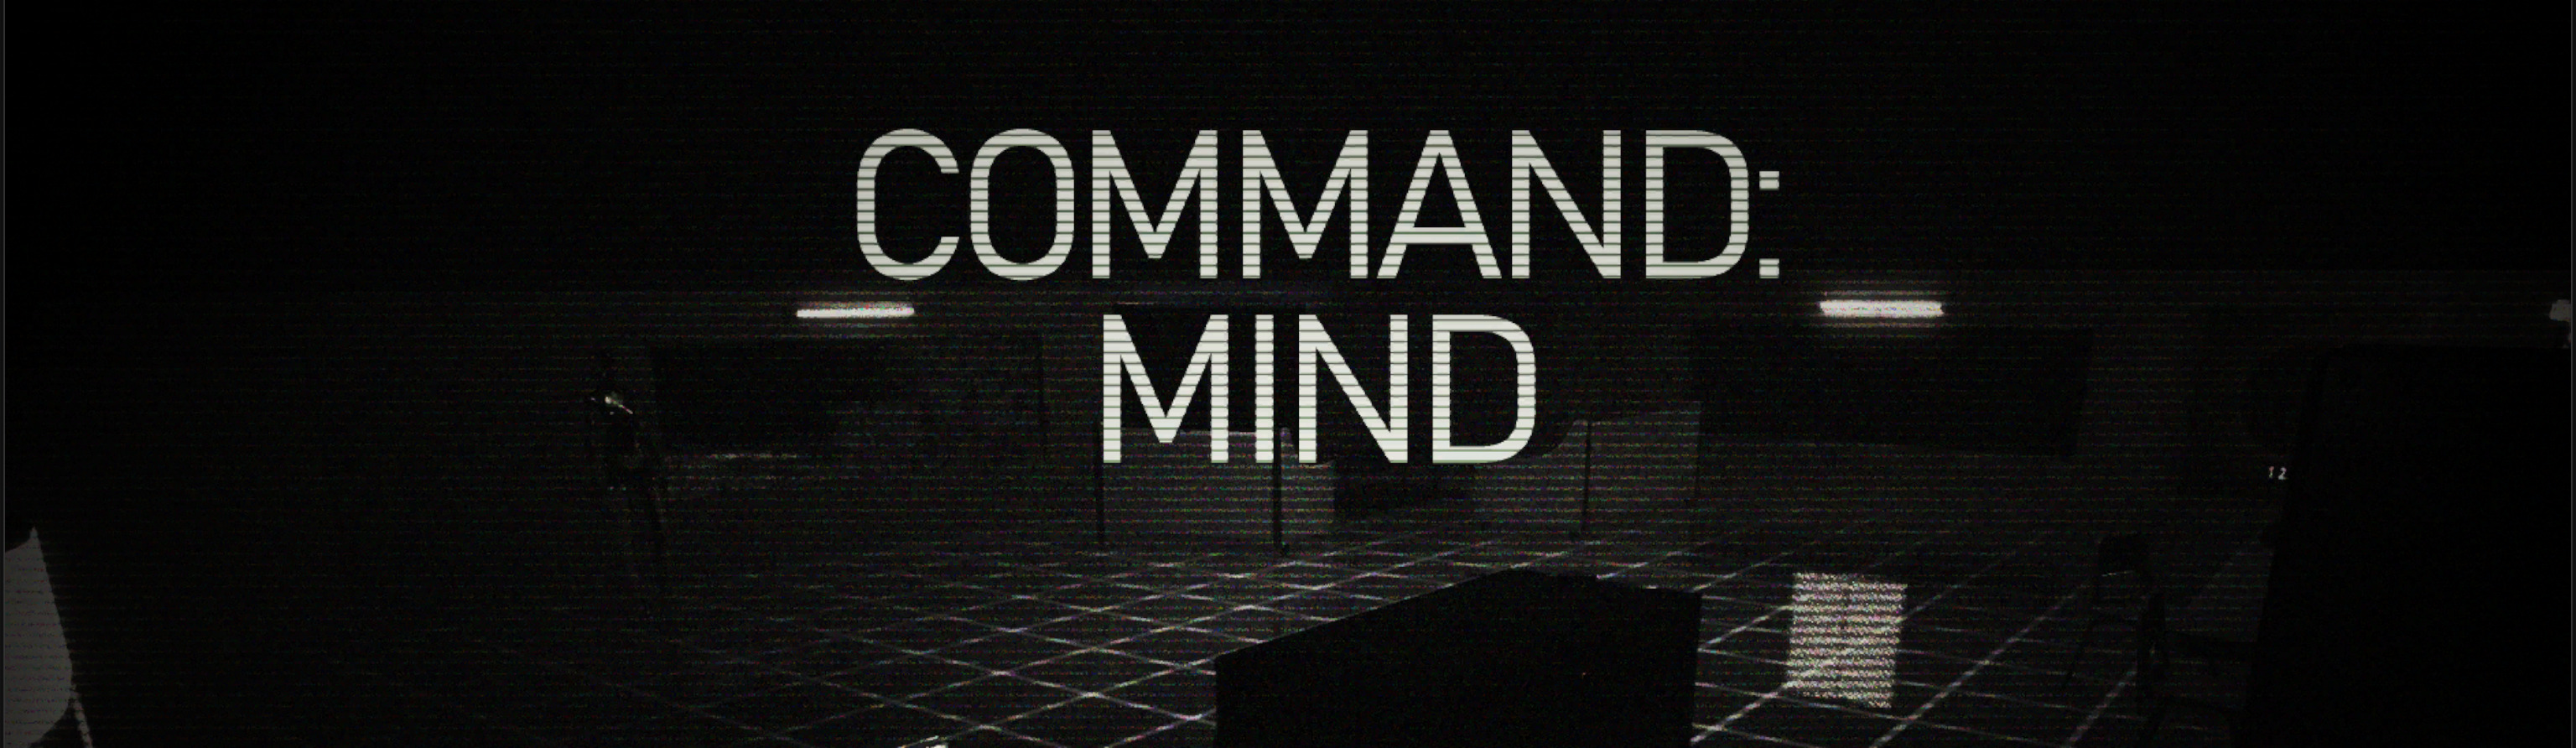 Command: Mind